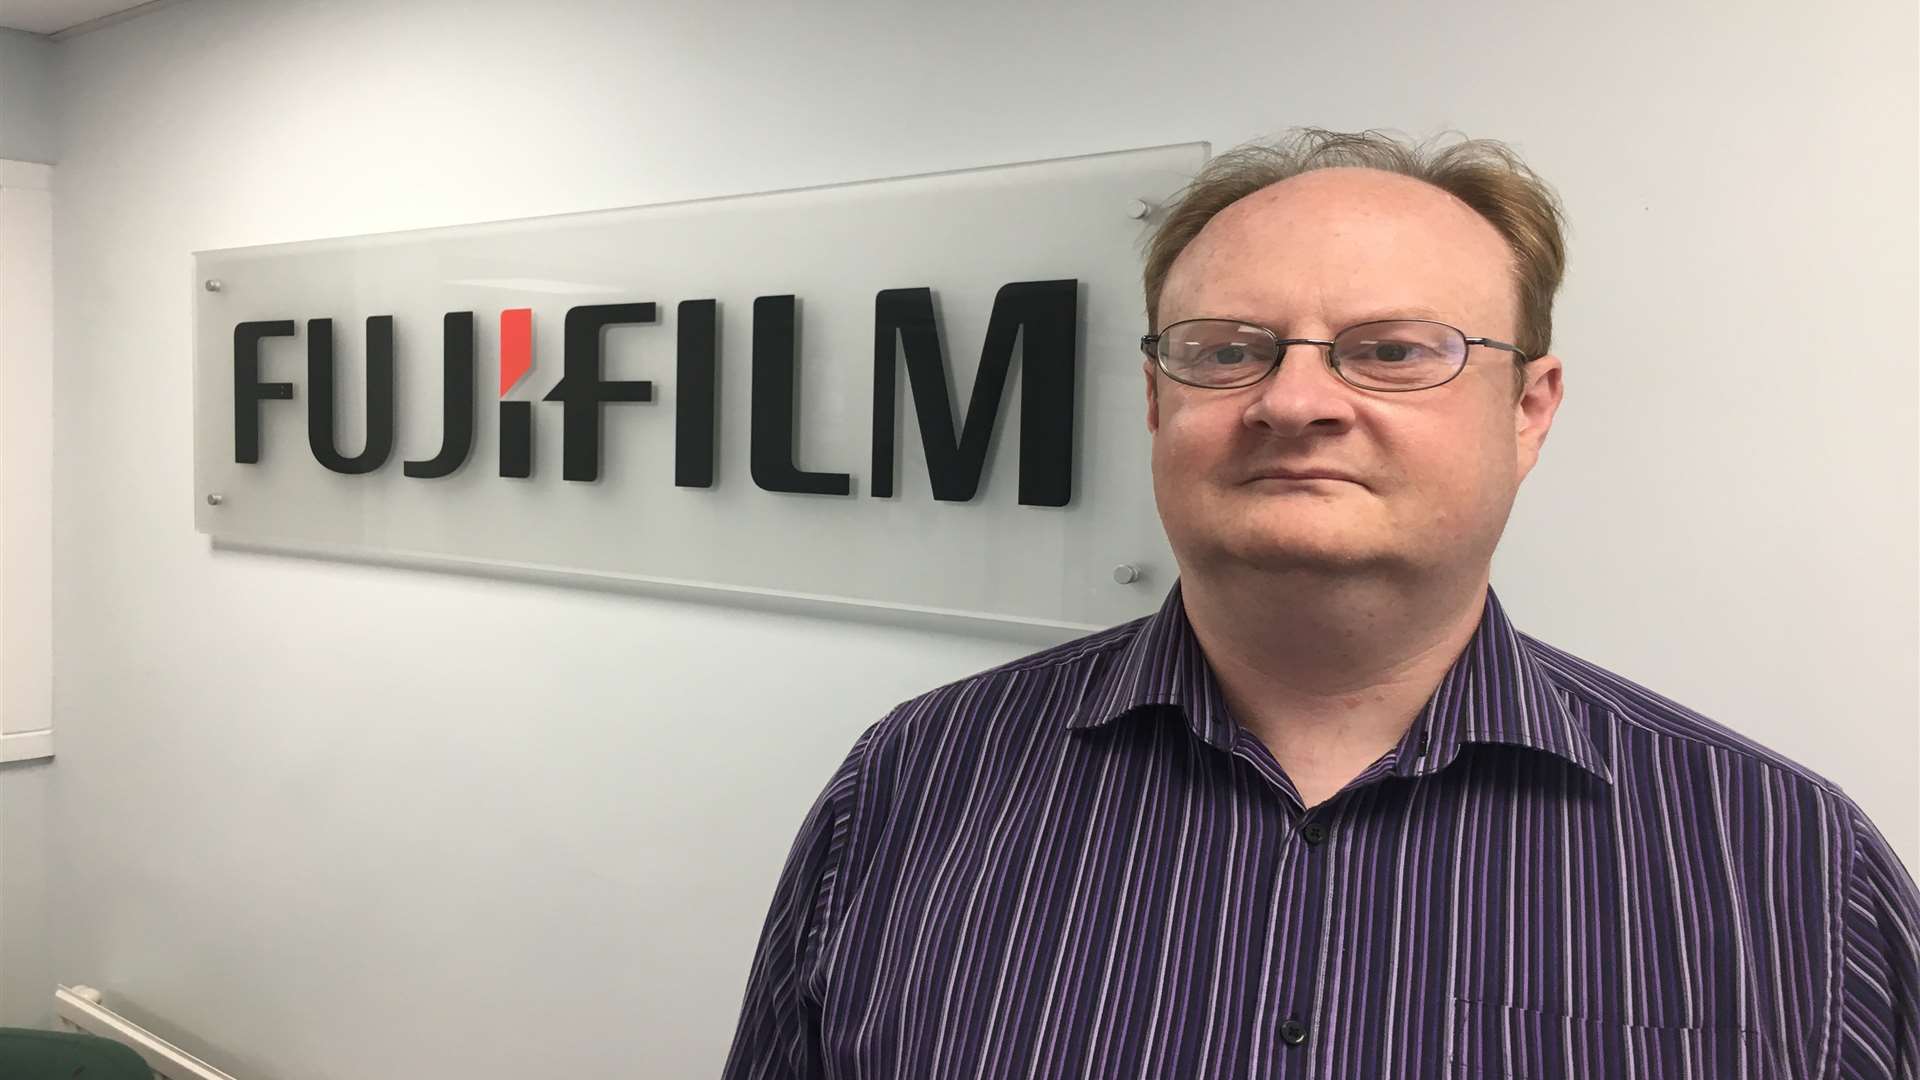 Fujifilm Speciality Ink Systems operations director Adam Batting